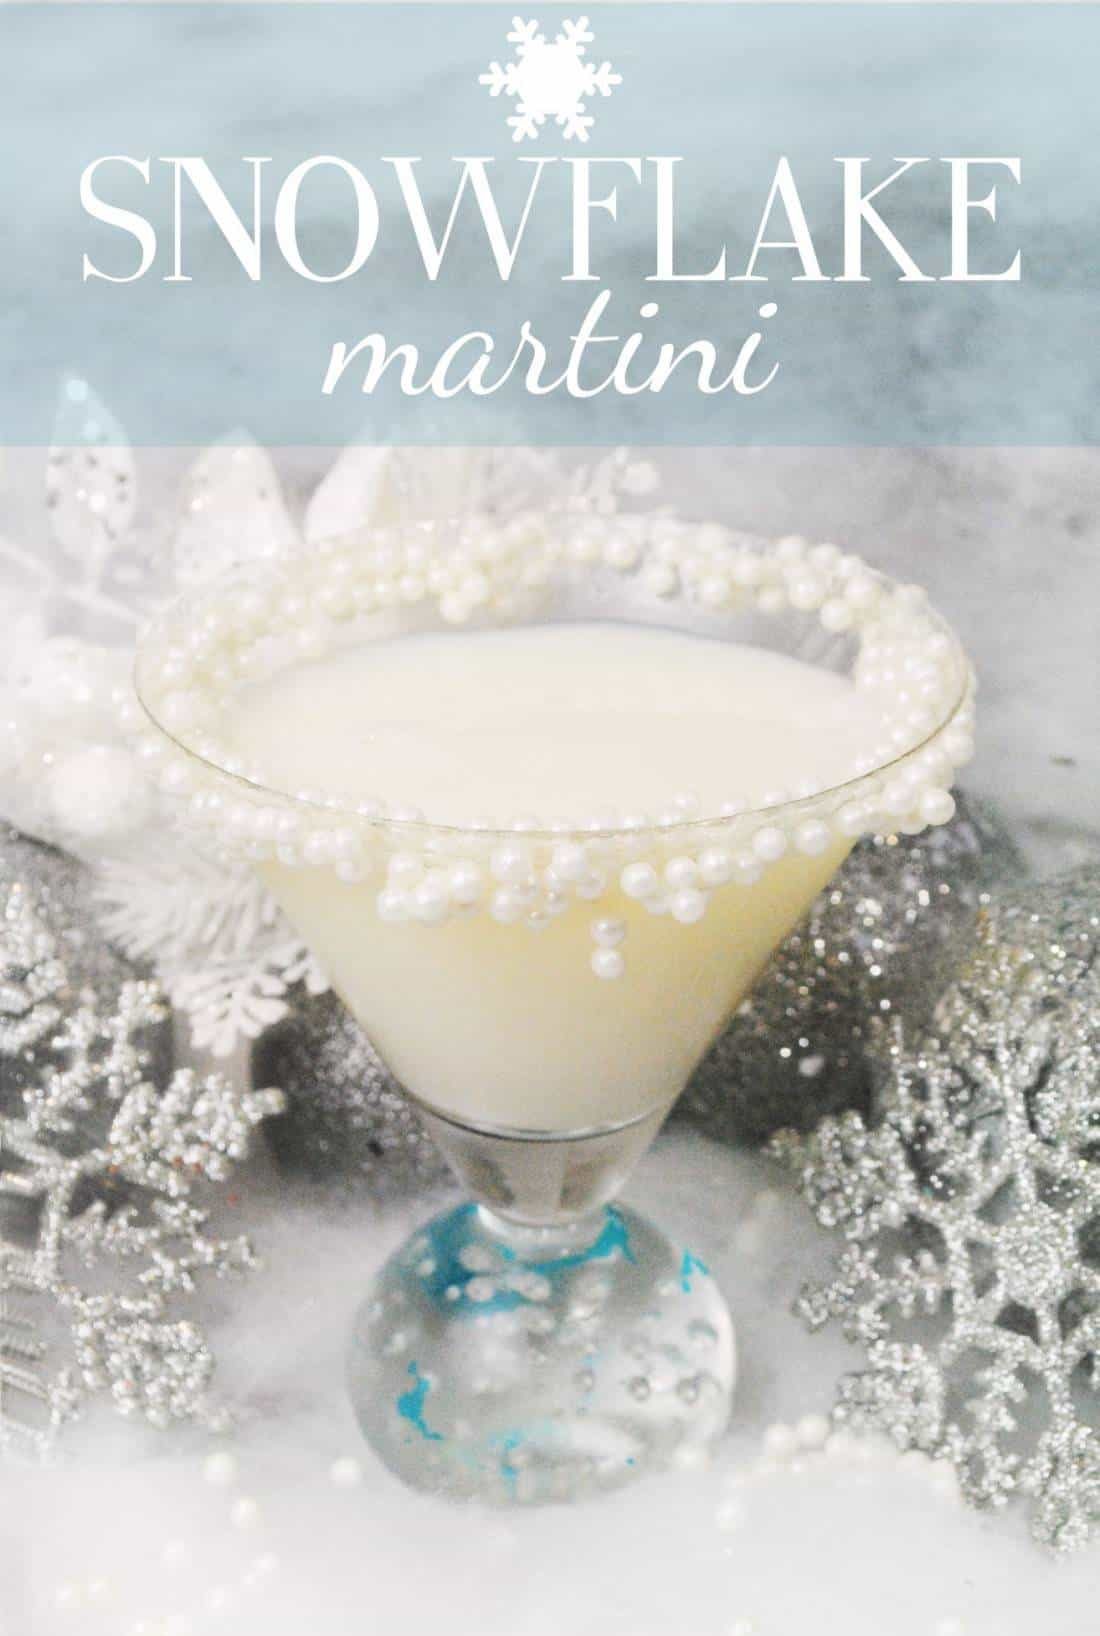 The Snowflake Martini